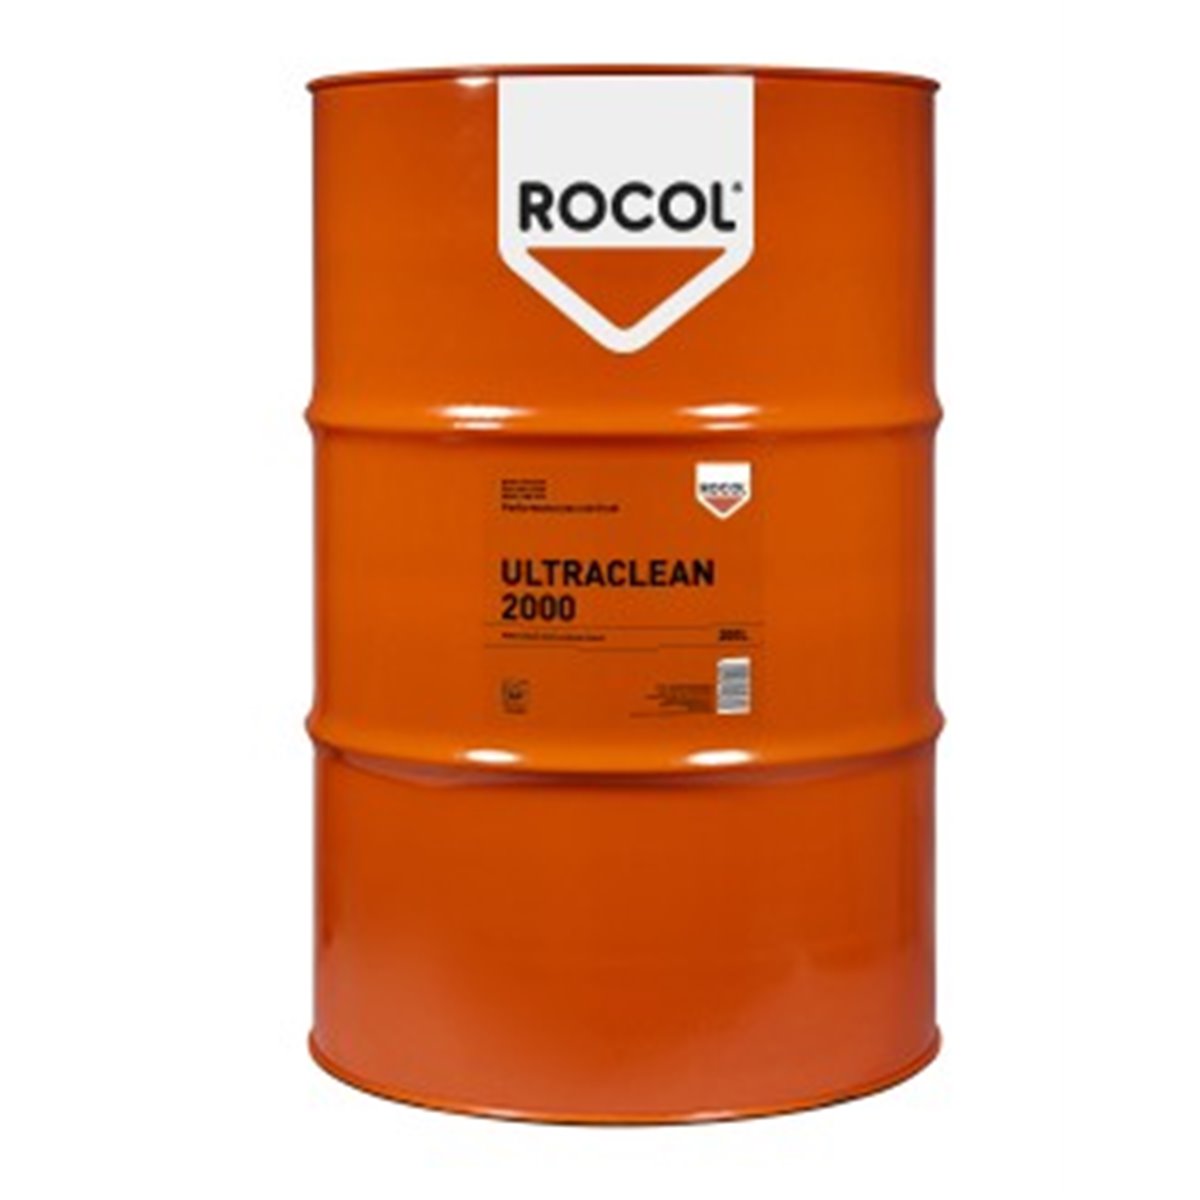 ULTRACLEAN 2000 Rocol 200ml RS51059